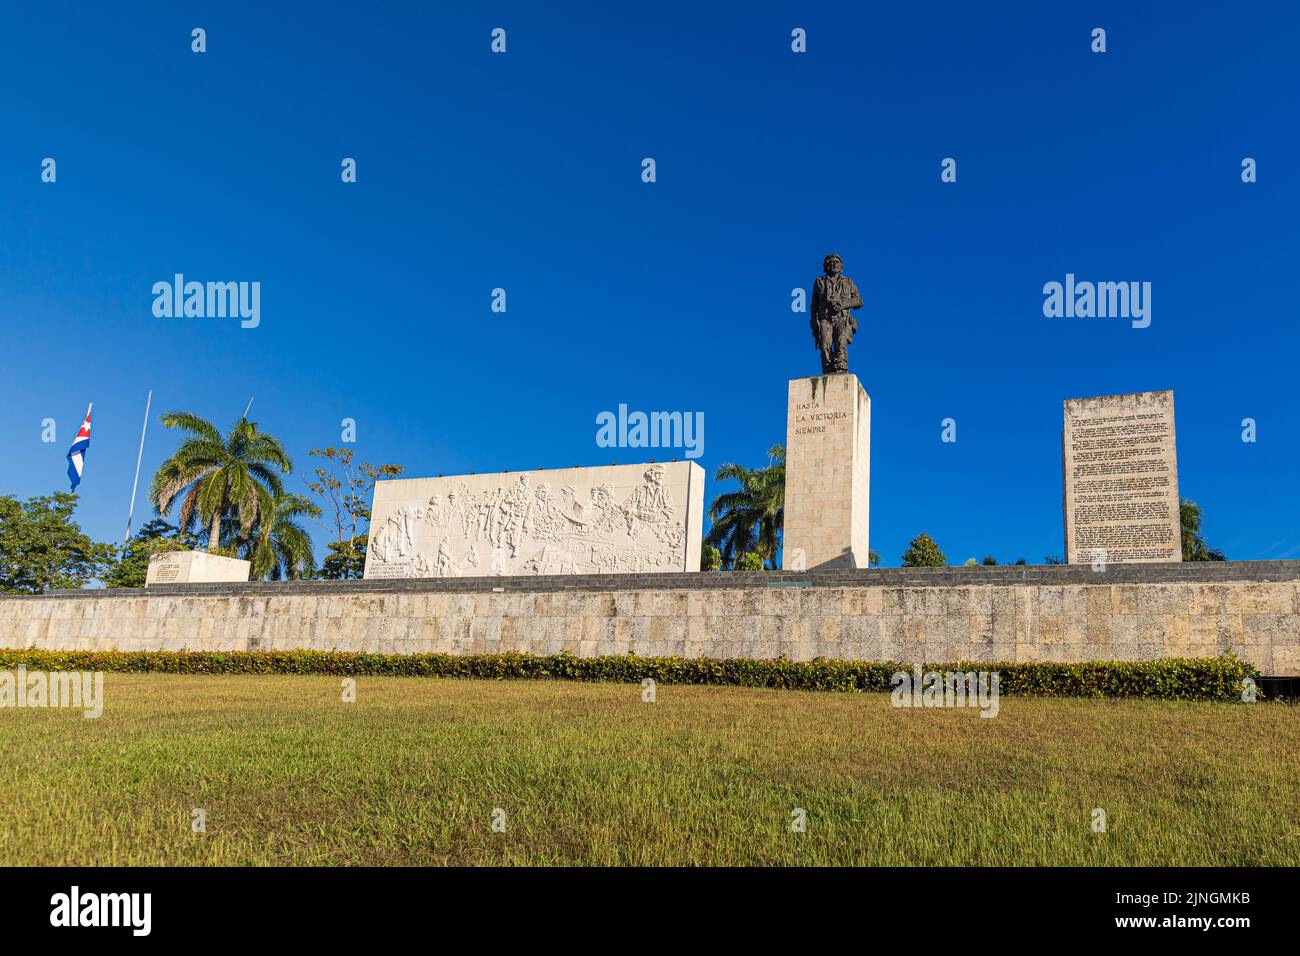 SANTA CLARA, CUBA - JANUARY 2021: The Che Guevara Mausoleum is a memorial in Santa Clara, Cuba, located in Plaza Che Guevara Stock Photo